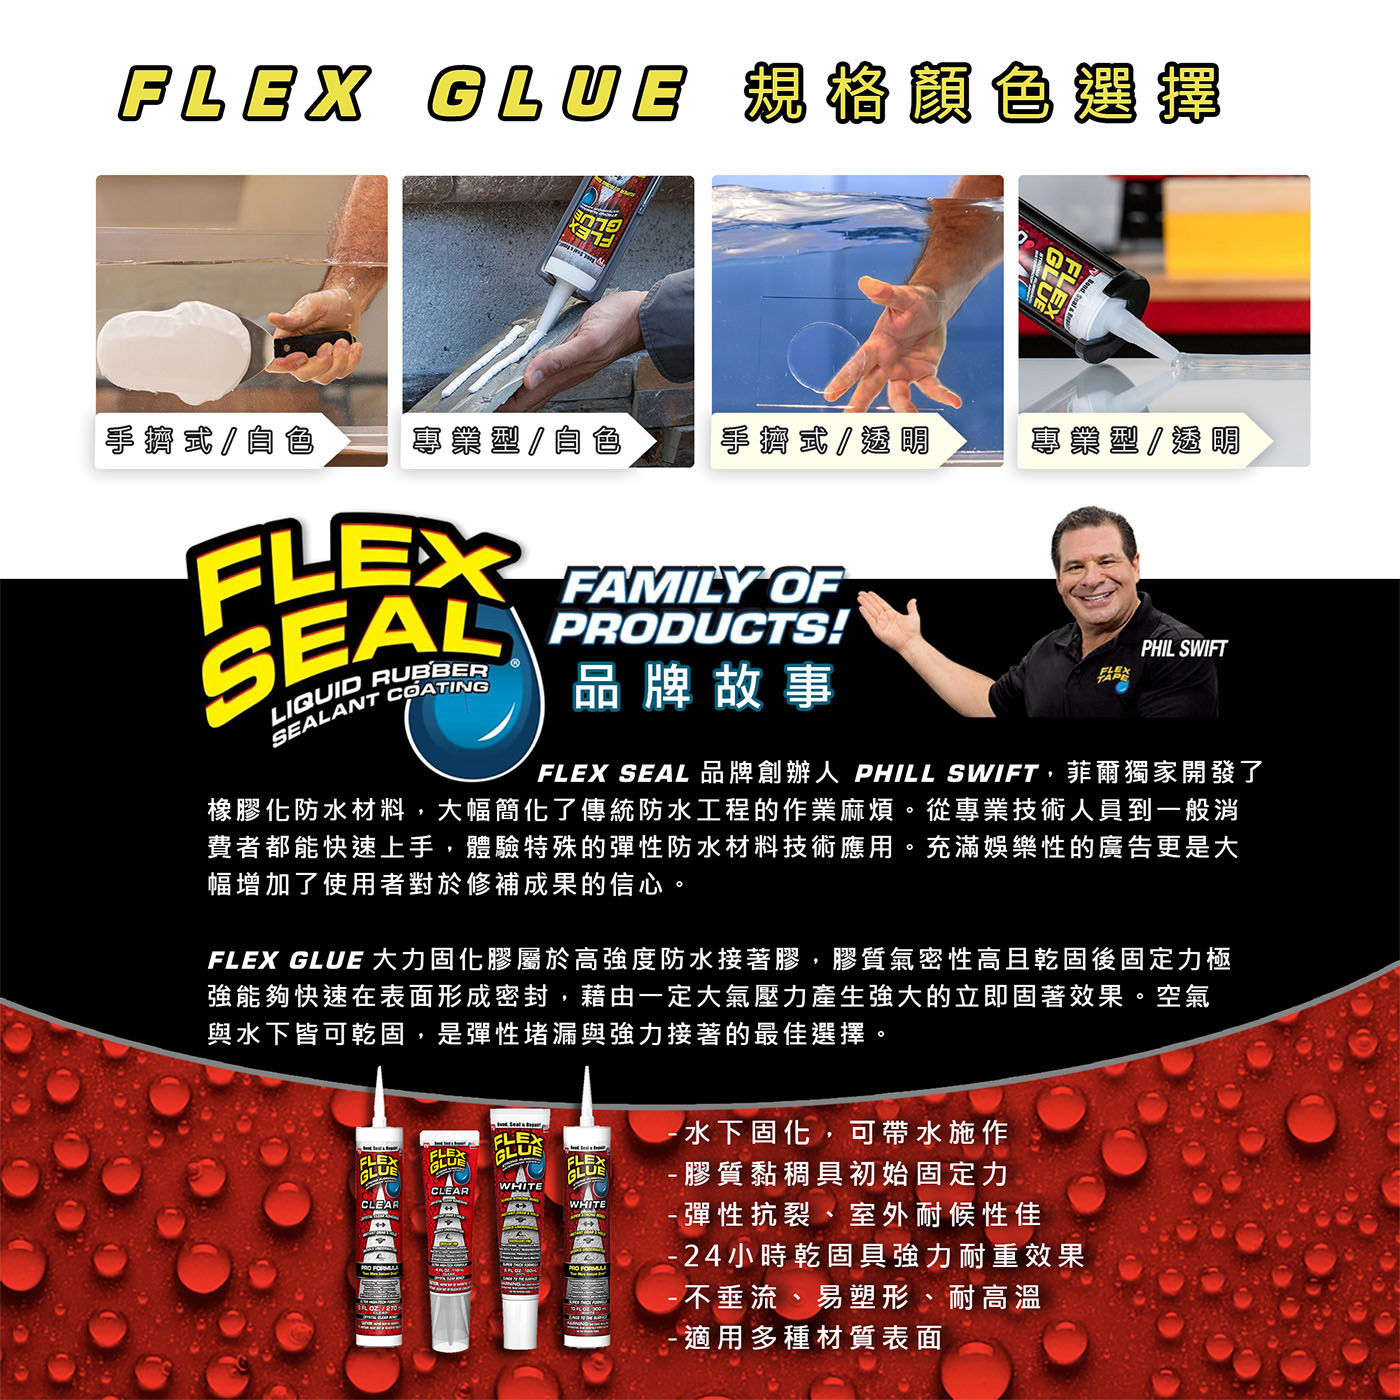 FLEX GLUE 大力固化膠透明，美國製造，原裝進口包裝，非傳統膠類，膠質穩定強韌、耐候性強、持久、強固，速乾配方、接著後快速固化，穩固牢靠。